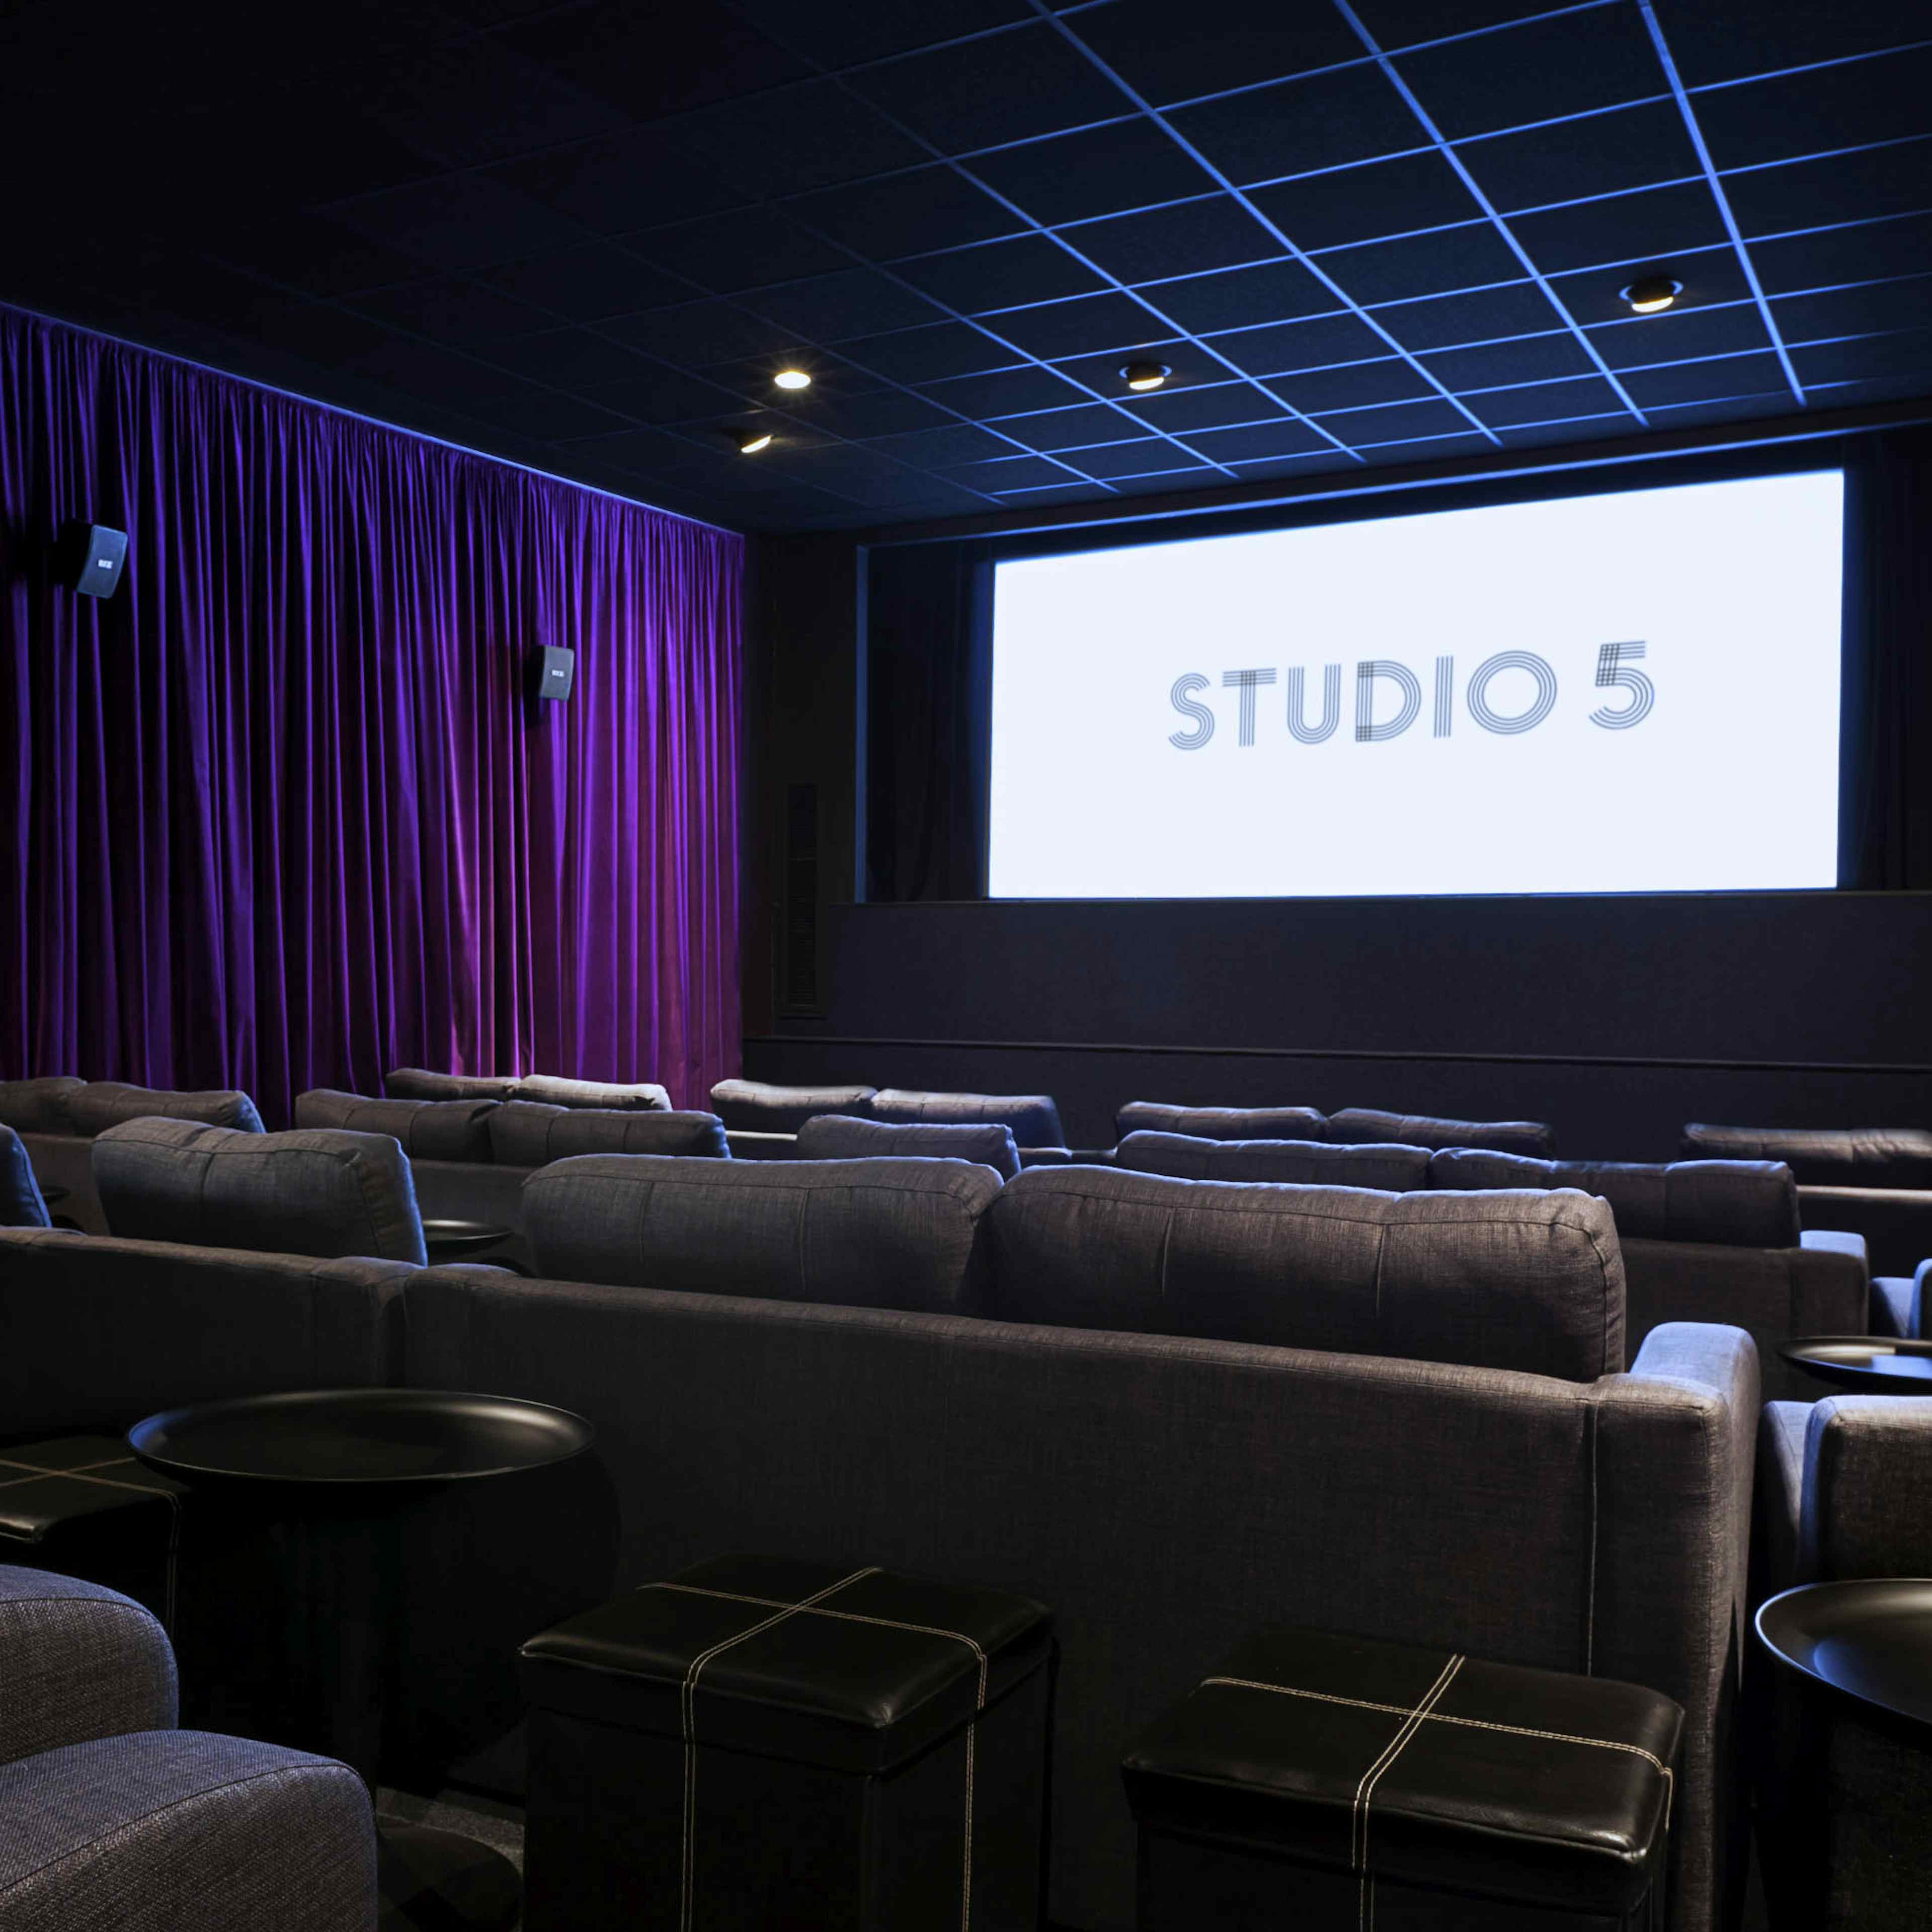 Genesis Cinema - Studio 5 image 2